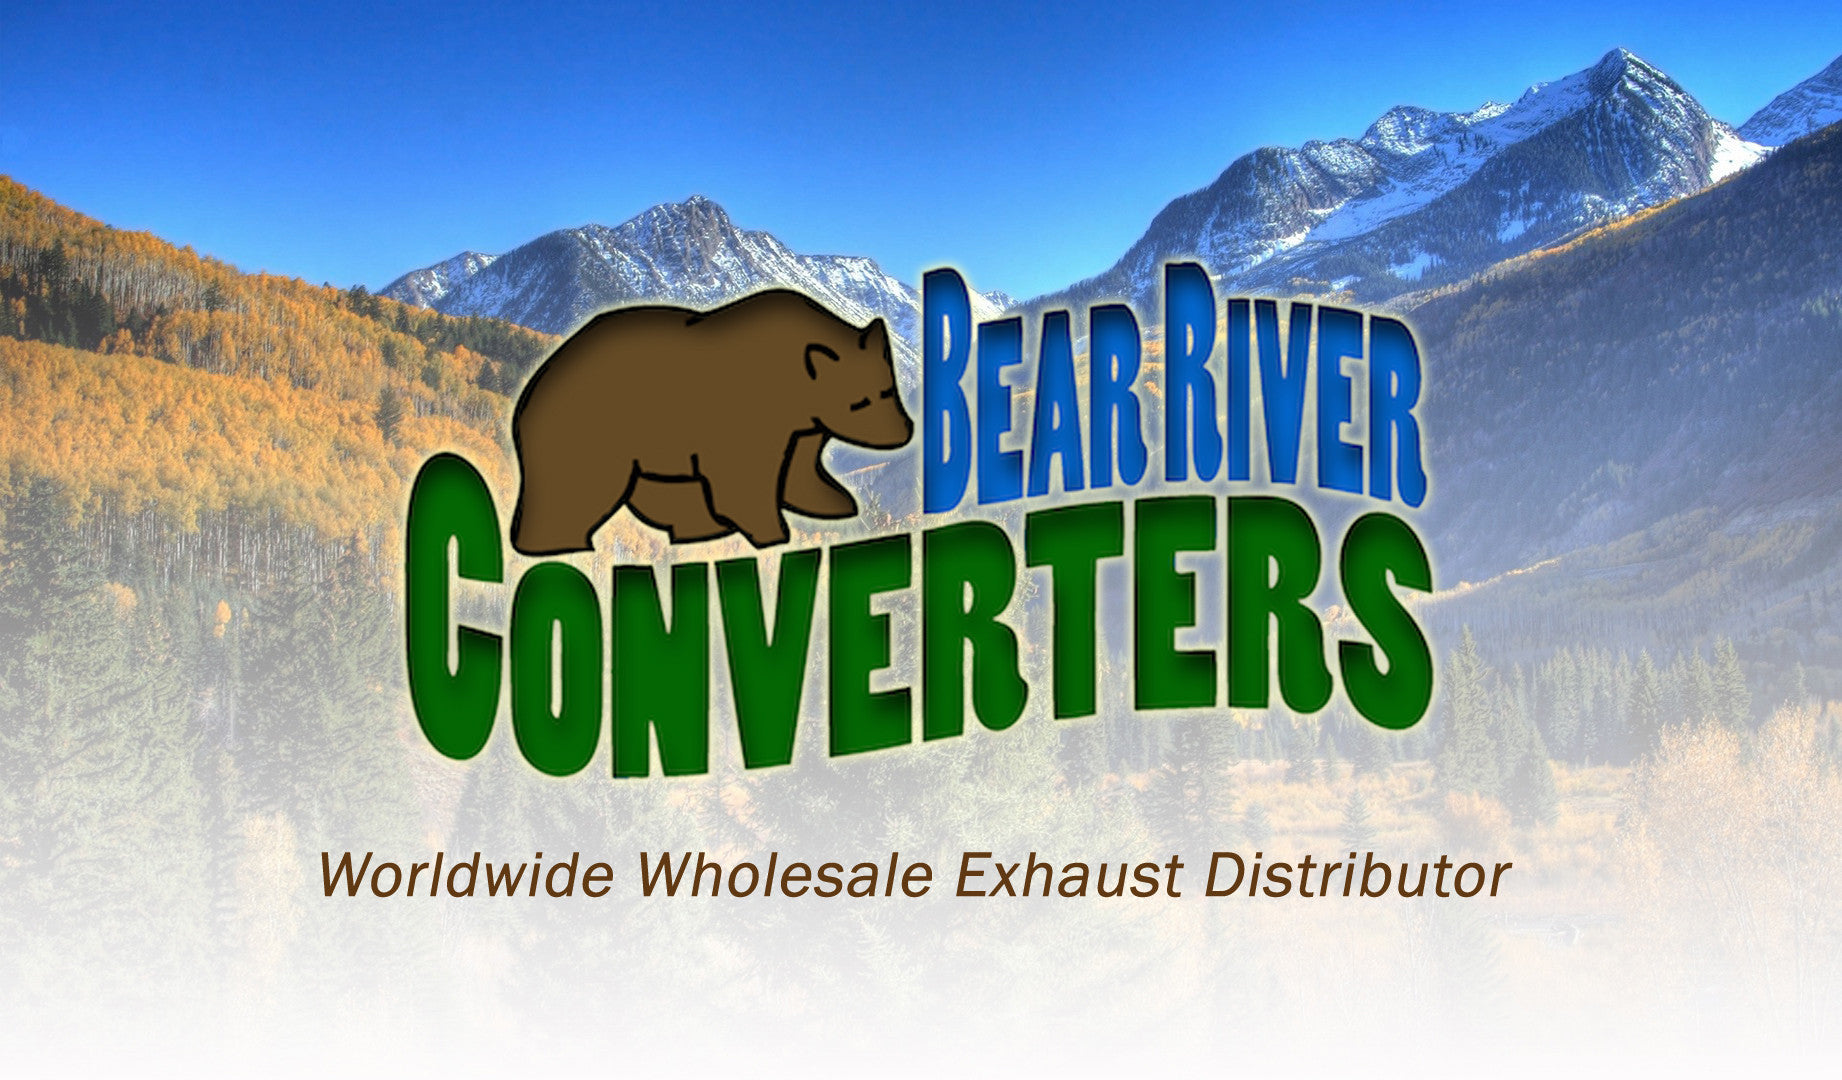 Bear River Converters - Worldwide Wholesale Exhaust Distributor